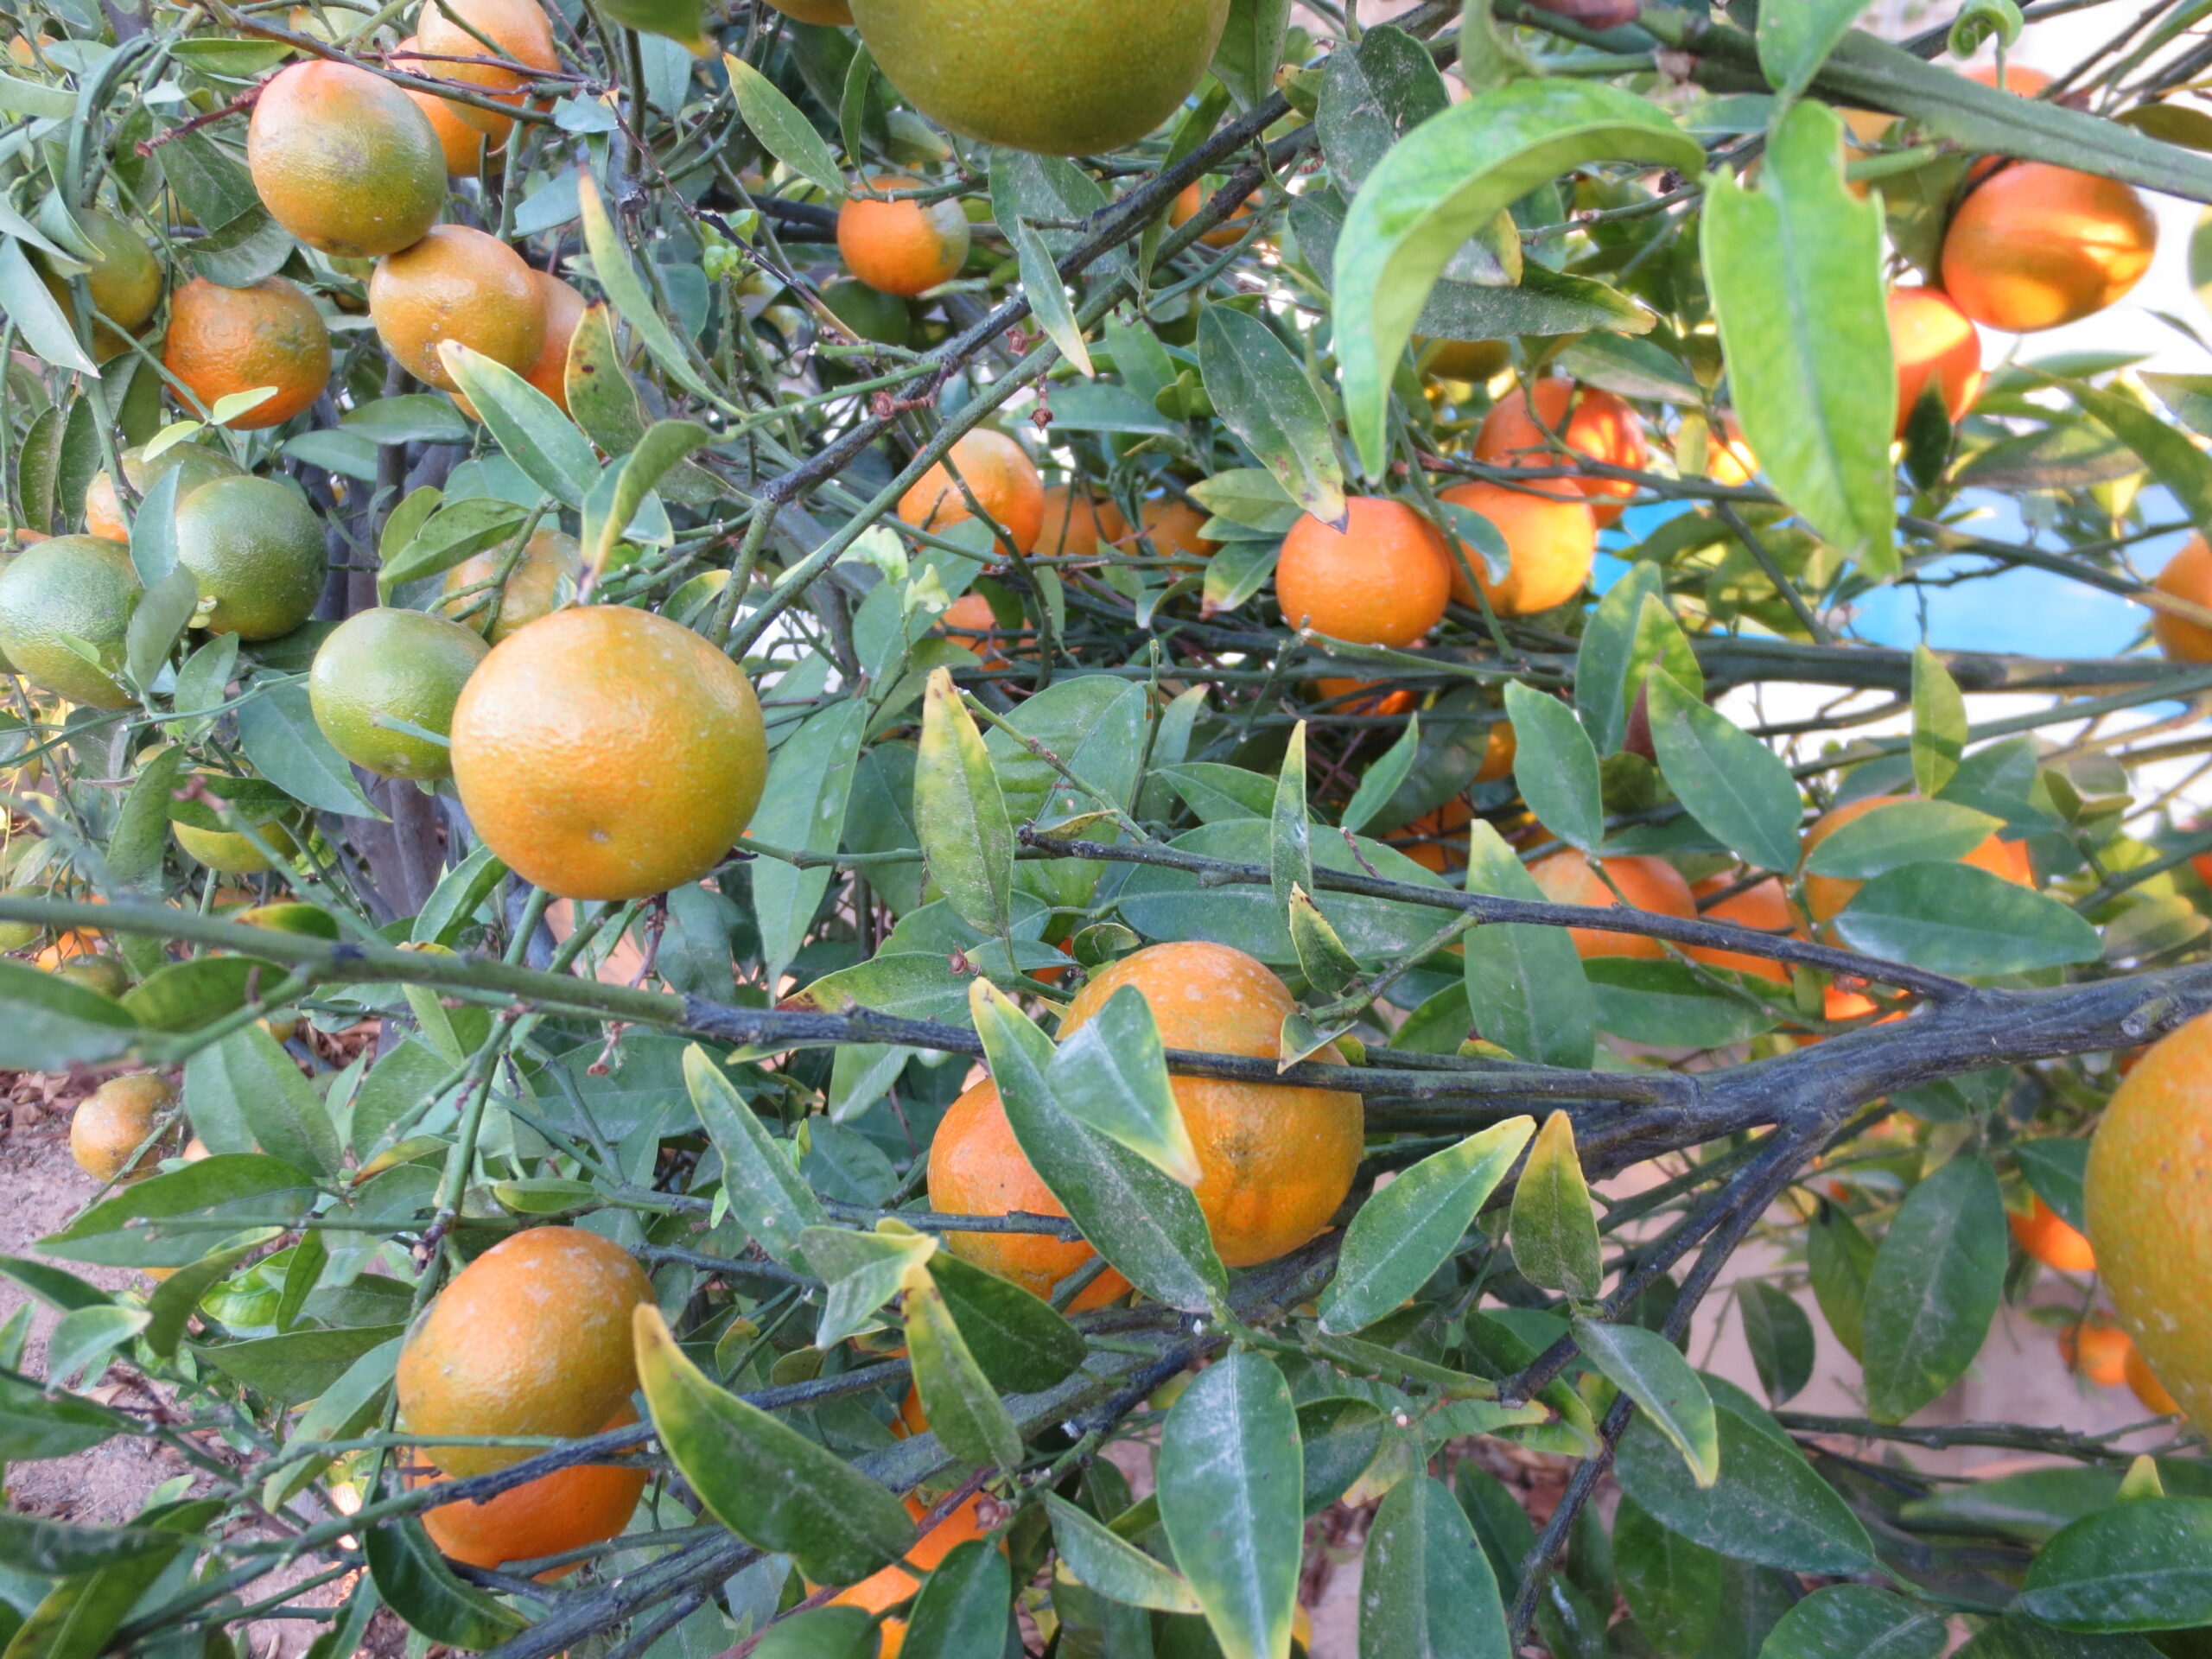 ABCD on Pixie Orange Farming In Kenya